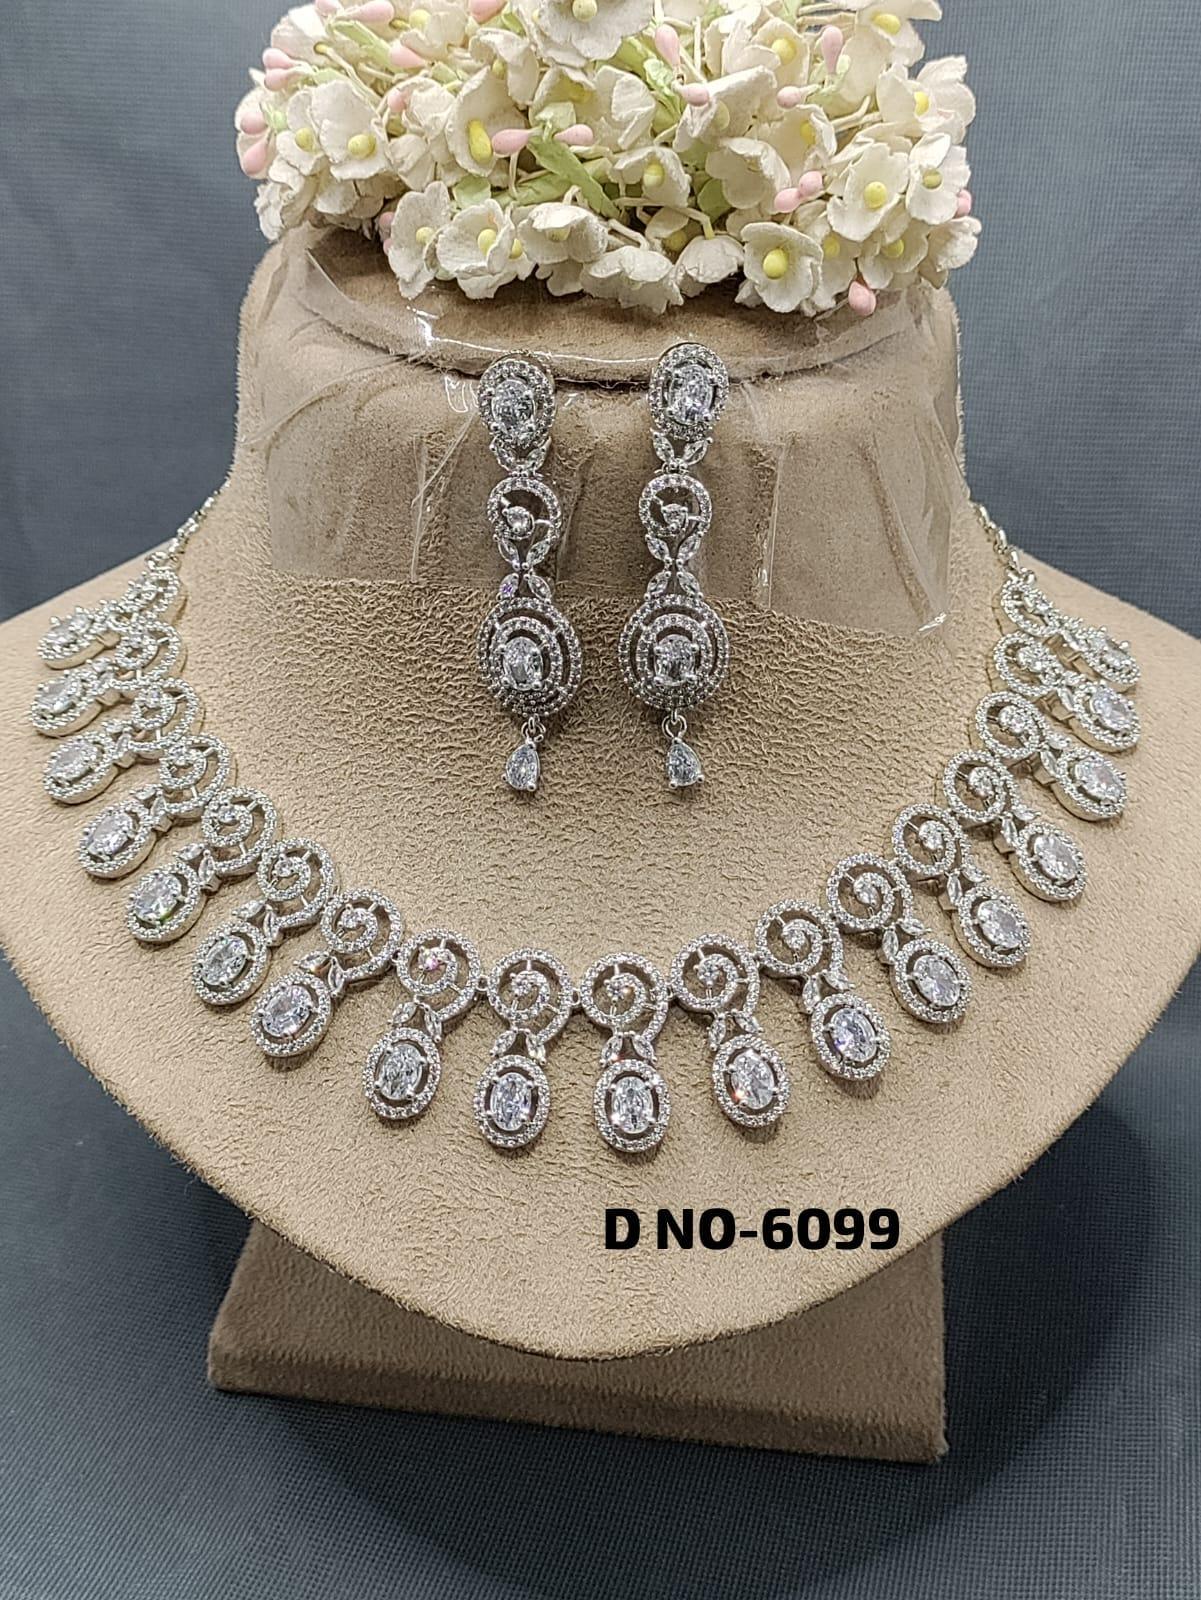 American Diamond Necklace Rodium Sku-6099 C3 - rchiecreation